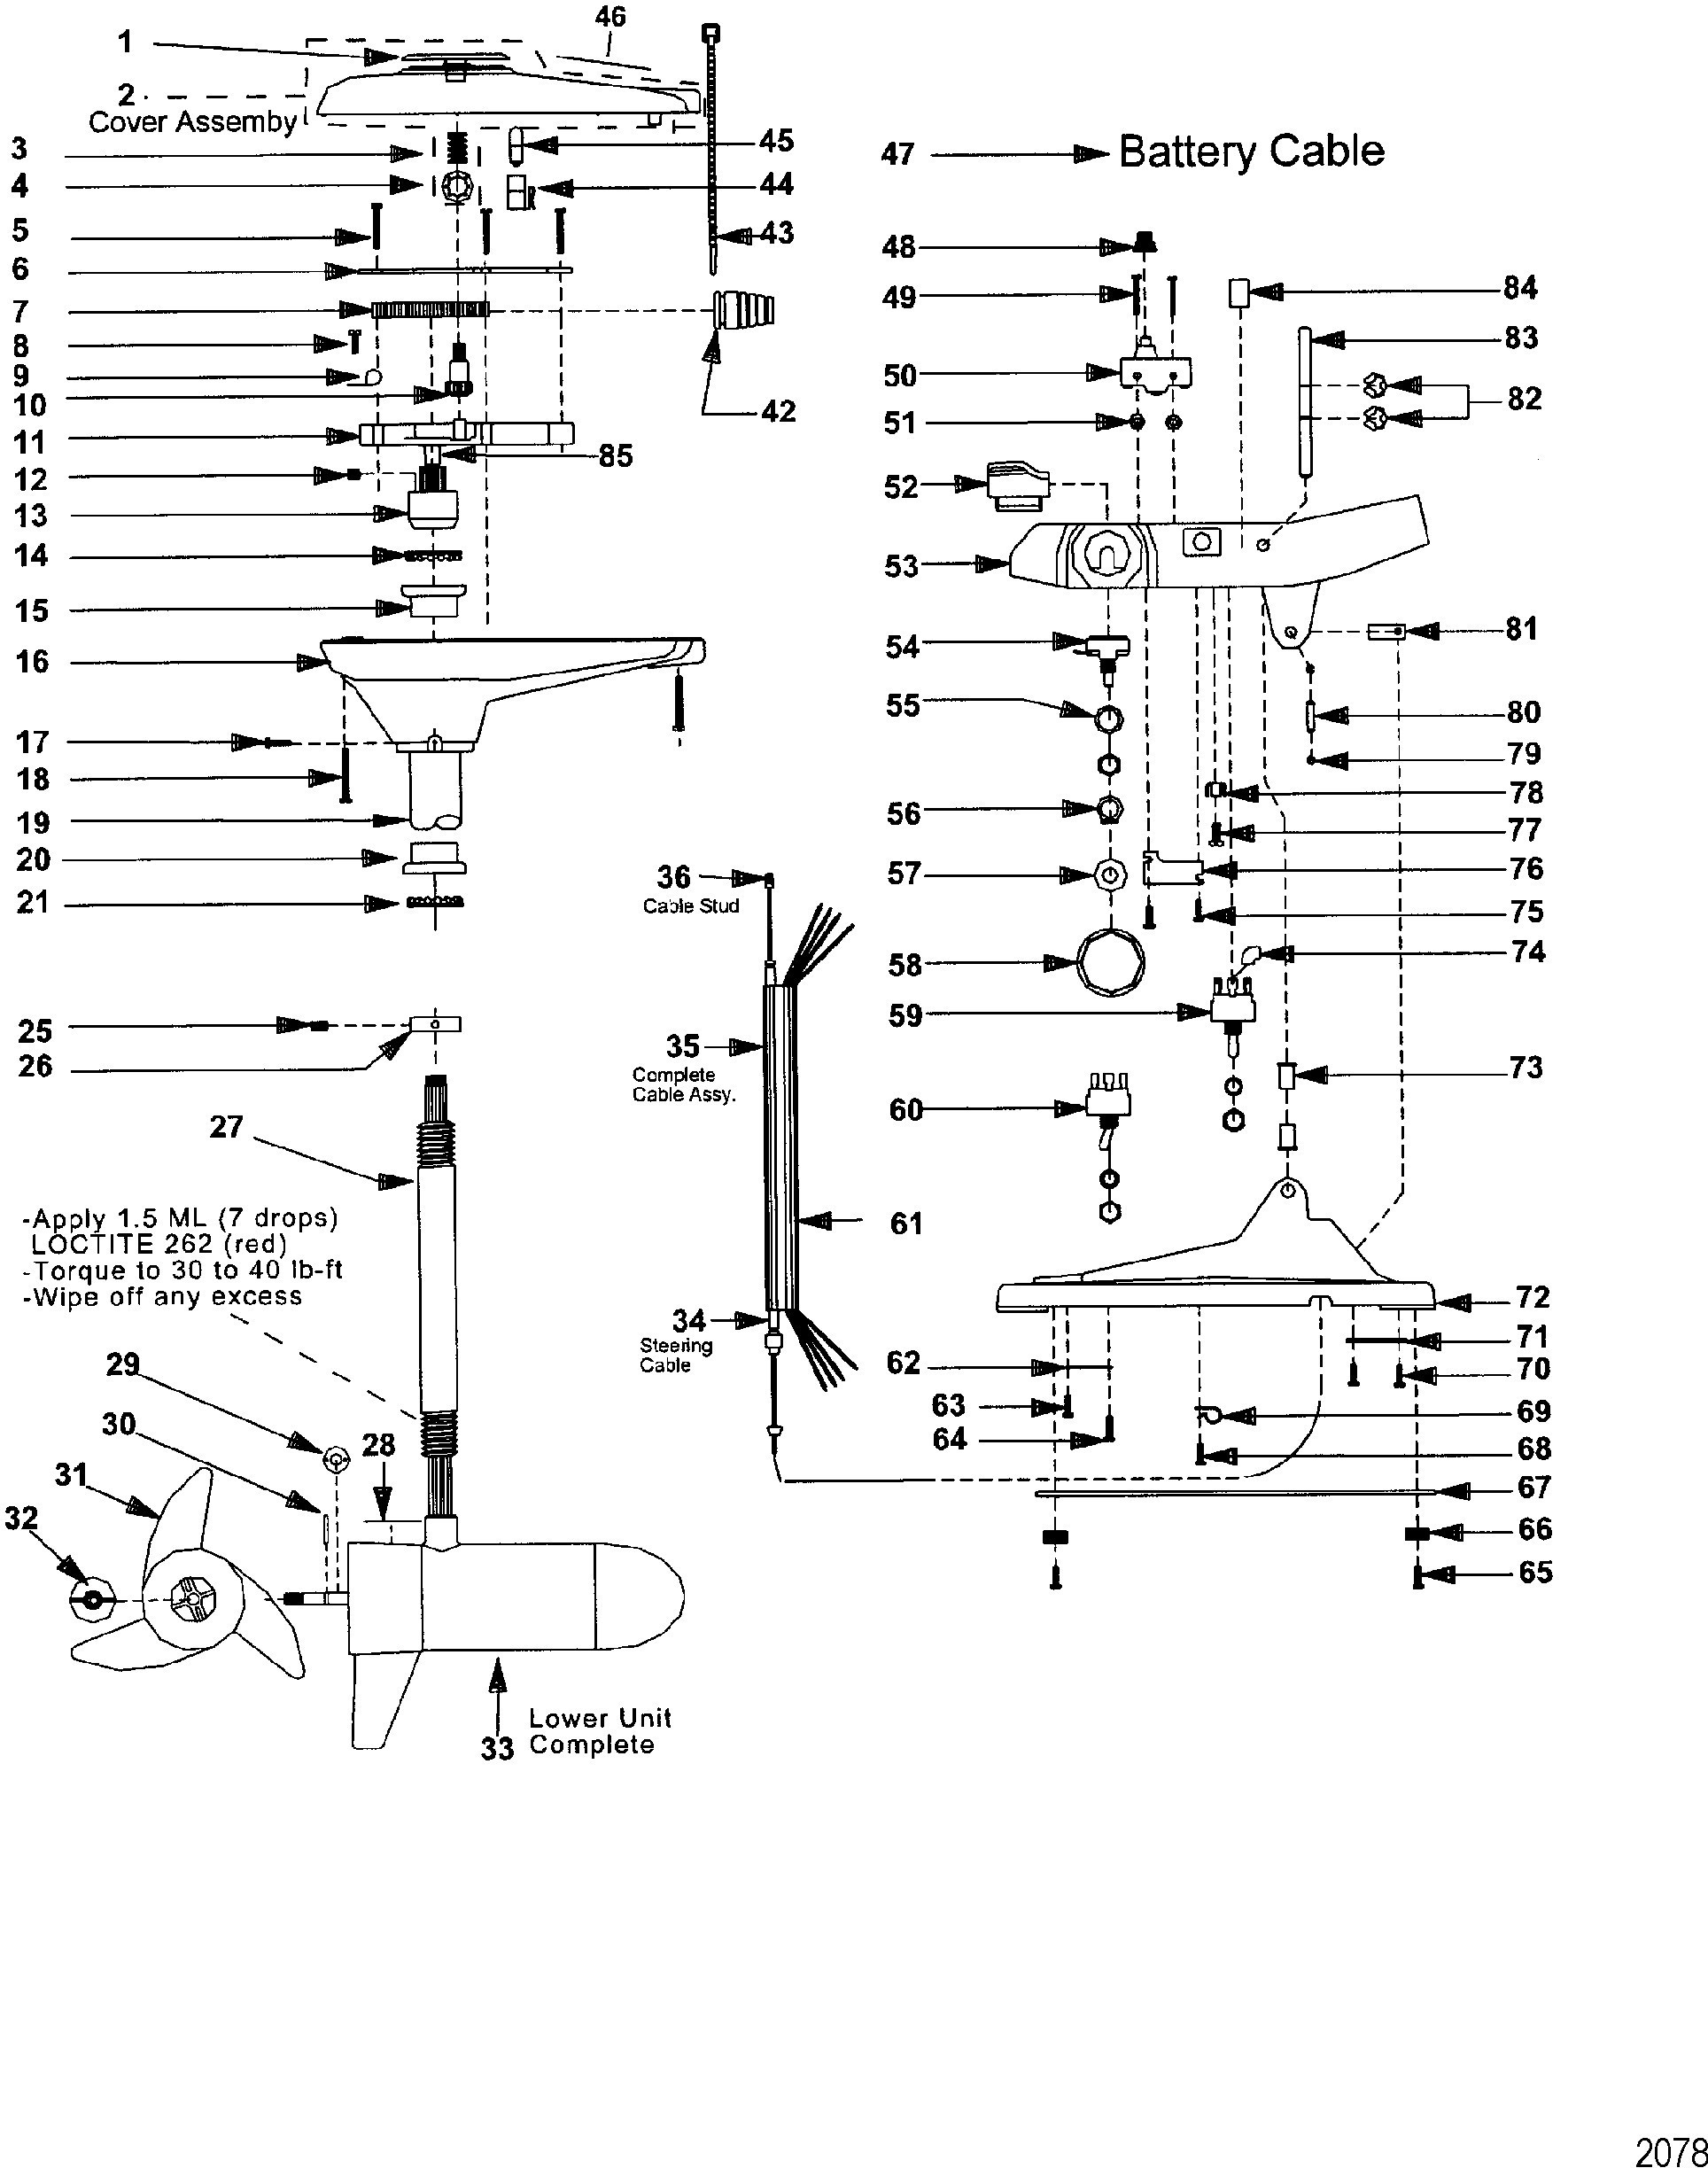 Motorguide Trolling Motor Wiring Diagram Valid Wiring Diagram For The Motor Best Trolling Motor Foot Switch Wiring